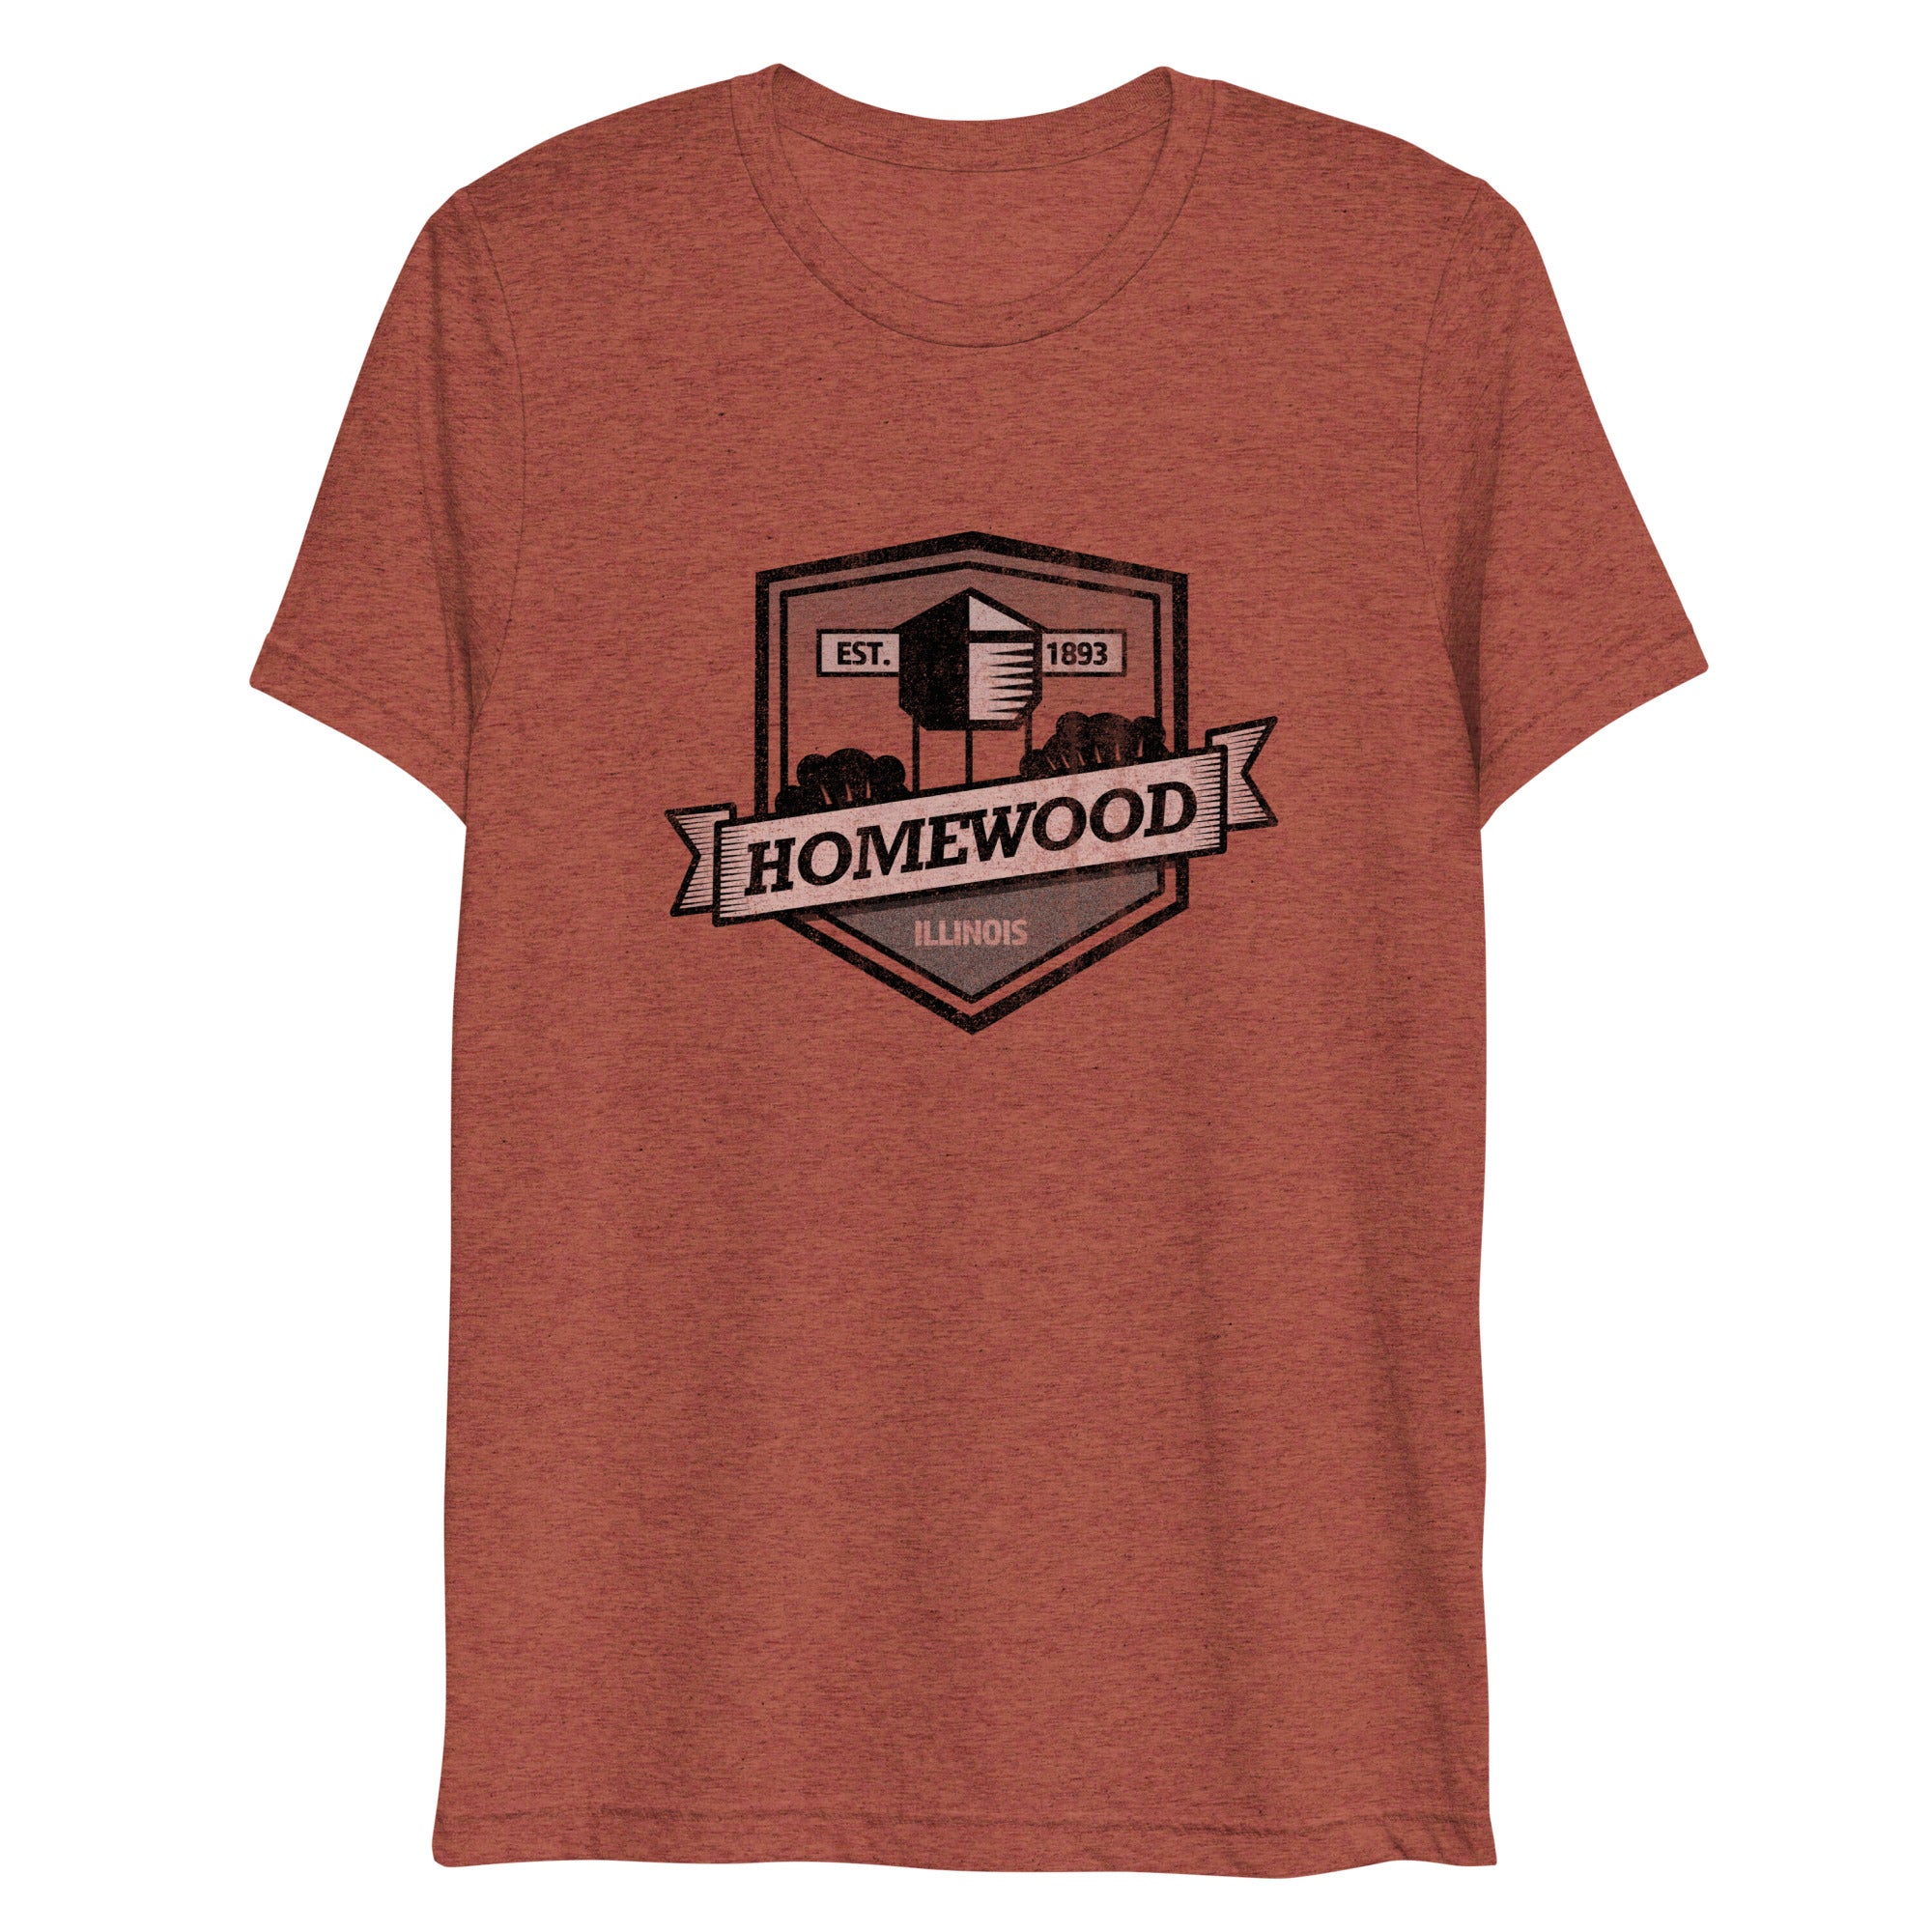 Homewood Pride 6 Short sleeve t-shirt